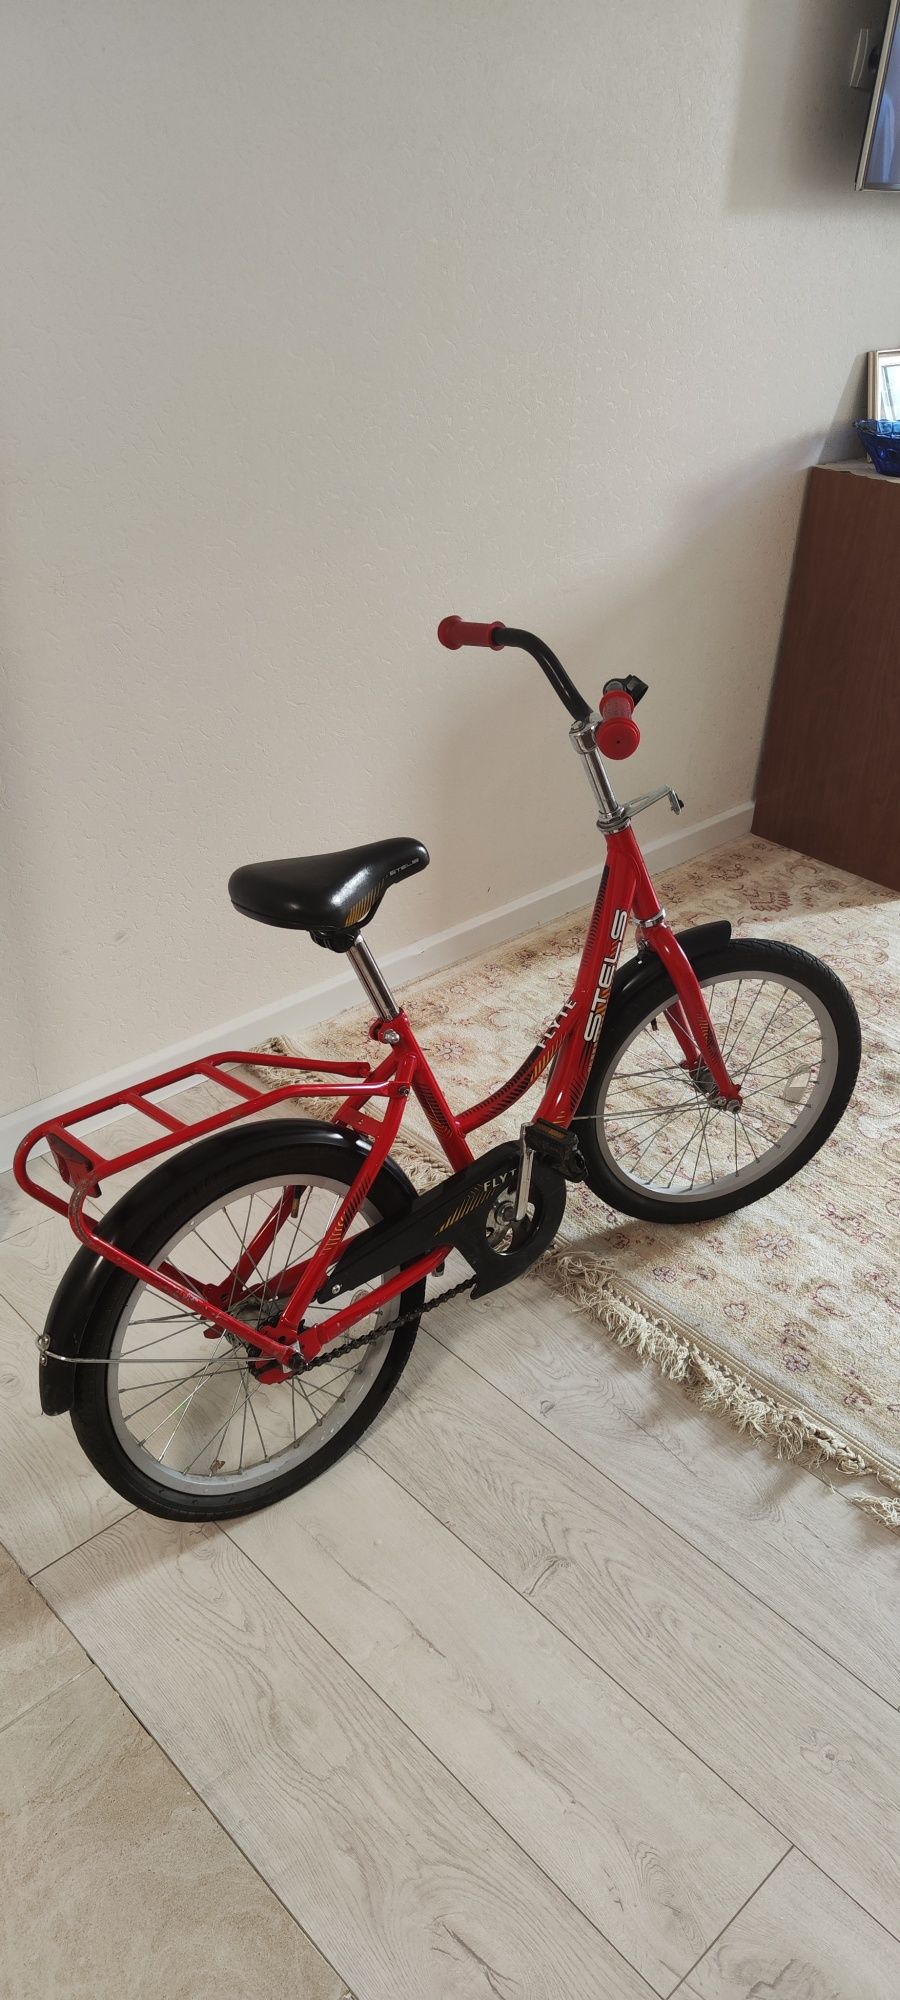 Велосипед Stels (Россия) аналог "школьника"